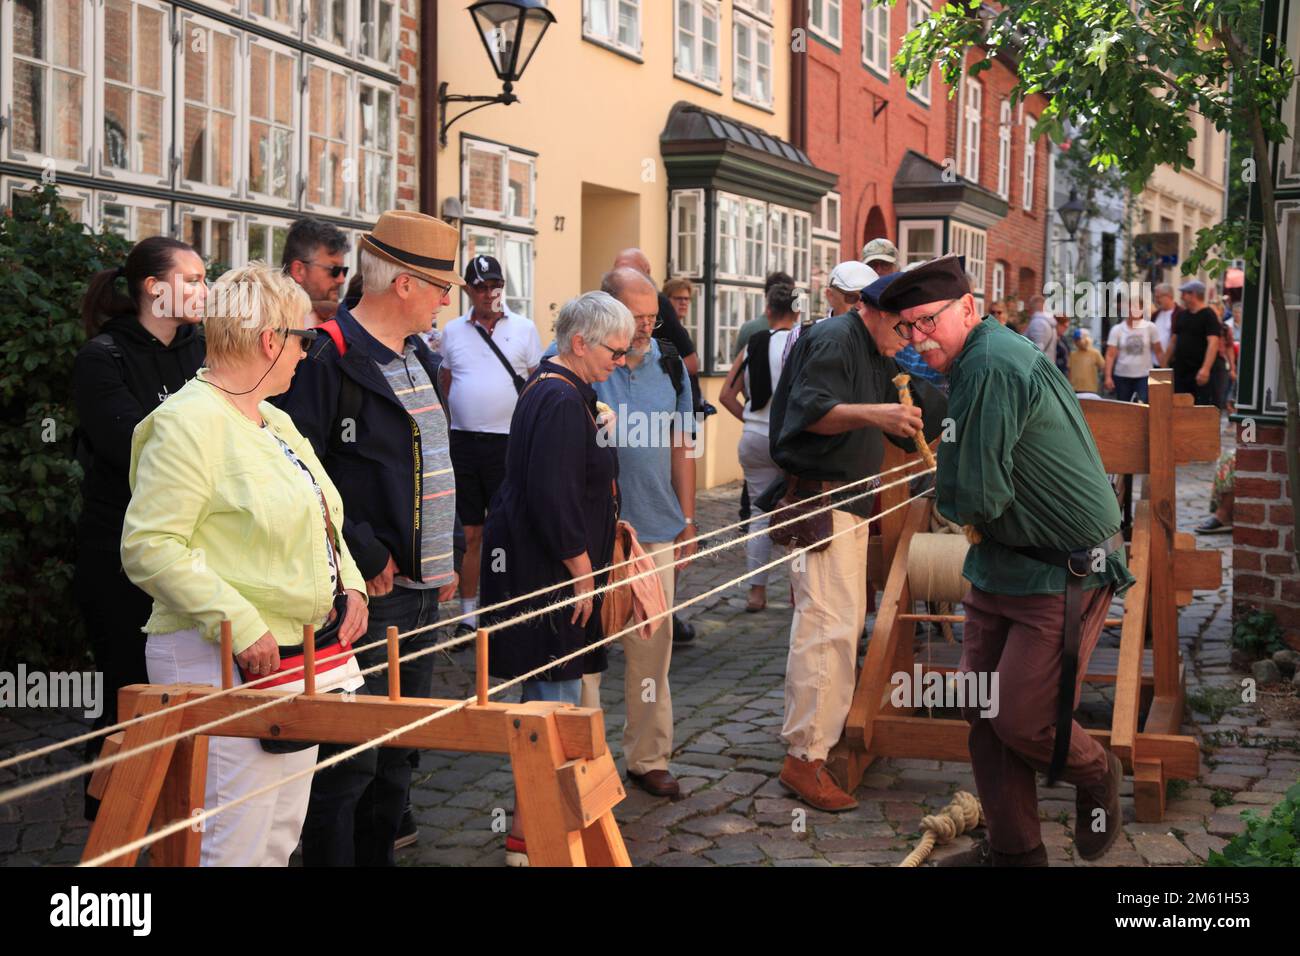 Seilmacher, Festival Alte Handwerkerstrasse, old town of Lueneburg, Lüneburg, Lower Saxony, Germany Stock Photo